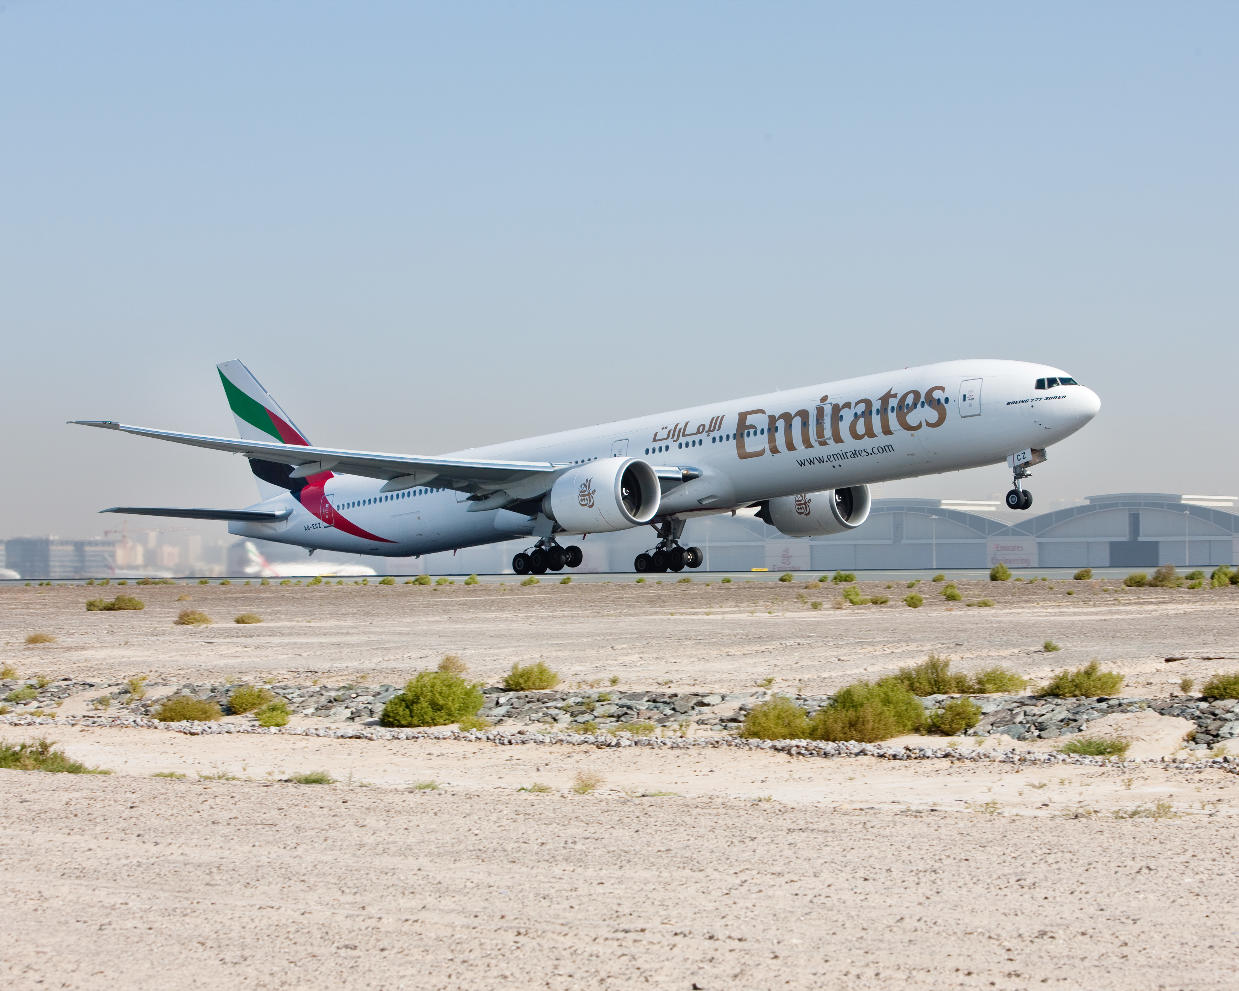 Half-year profits down at Emirates